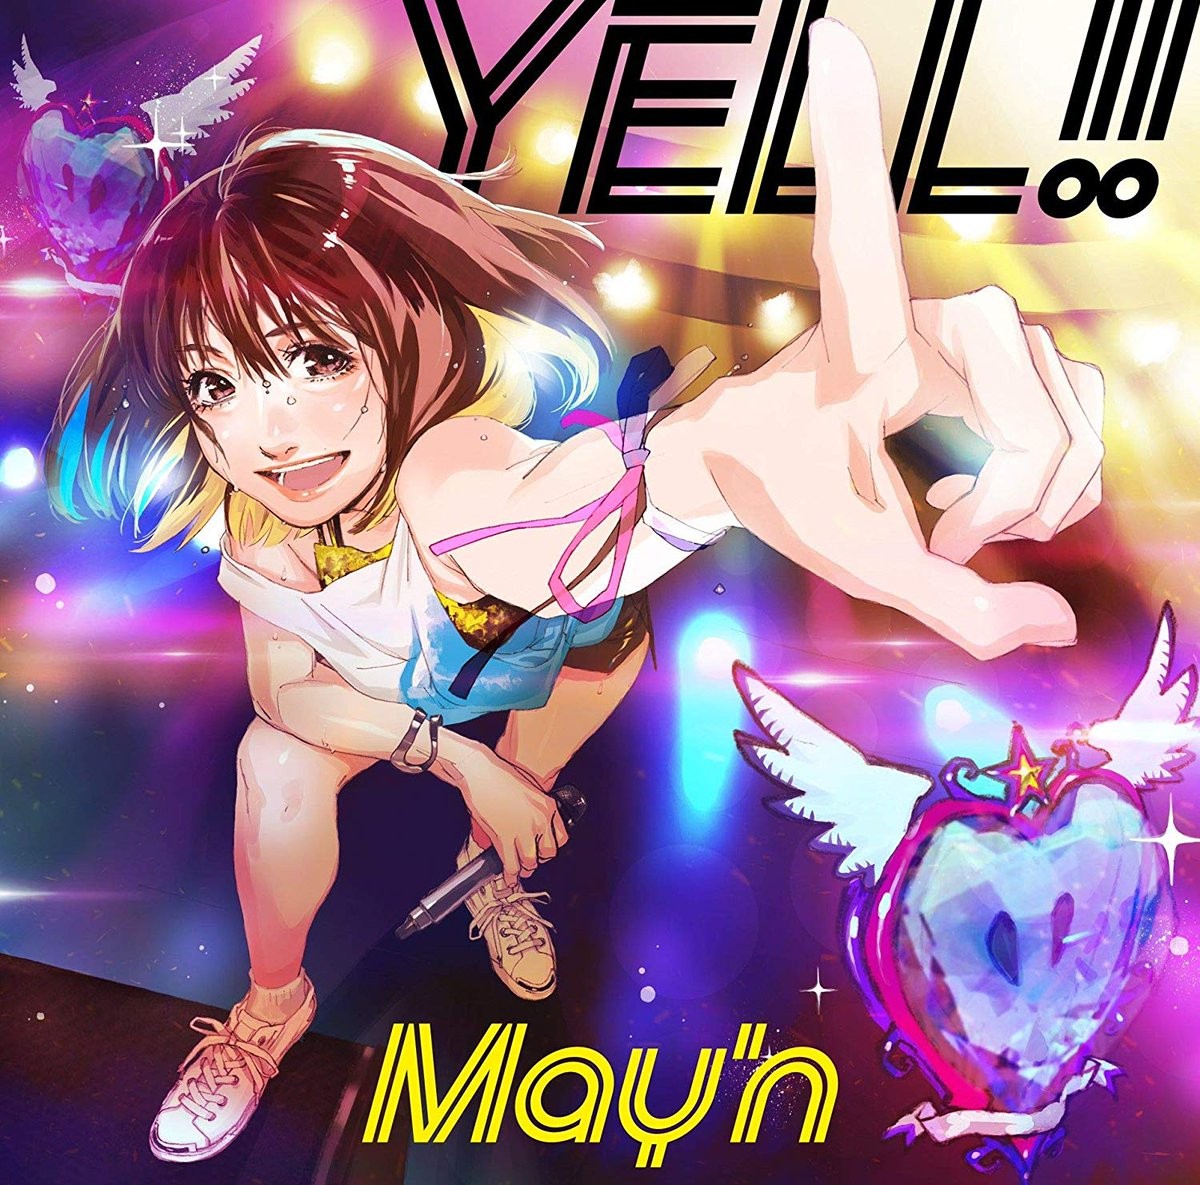 May’n (中林芽依) - YELL!! [Mora FLAC 24bit/48kHz]